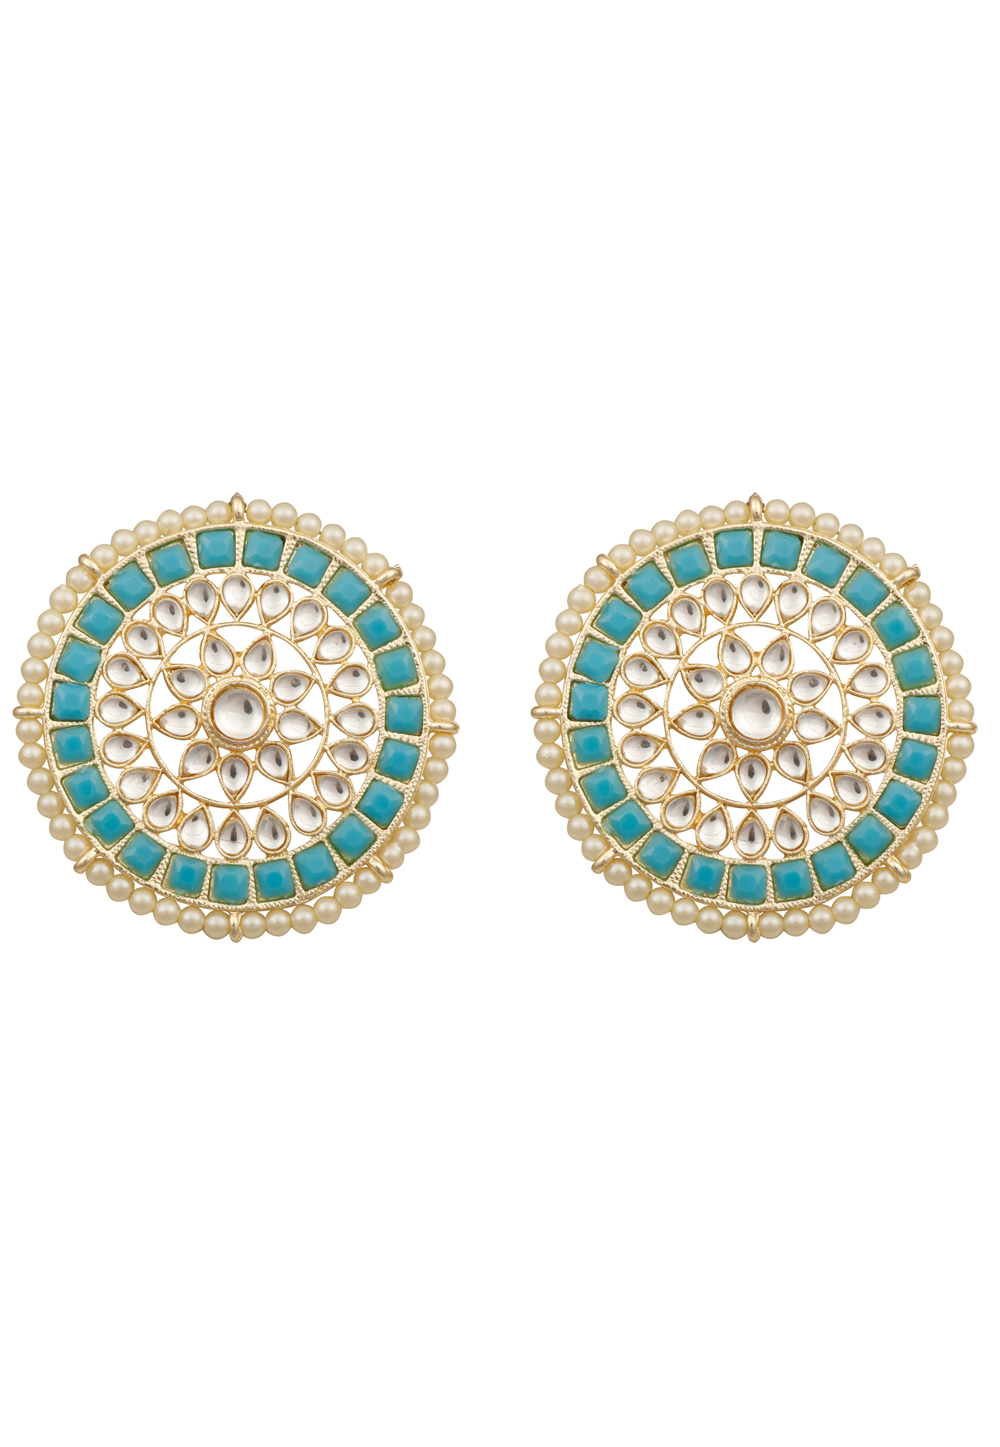 Mahi Aqua Blue Swarovski Crystals Bow Stud Earrings for Women and Girls  ER1194080RABlu : Amazon.in: Jewellery